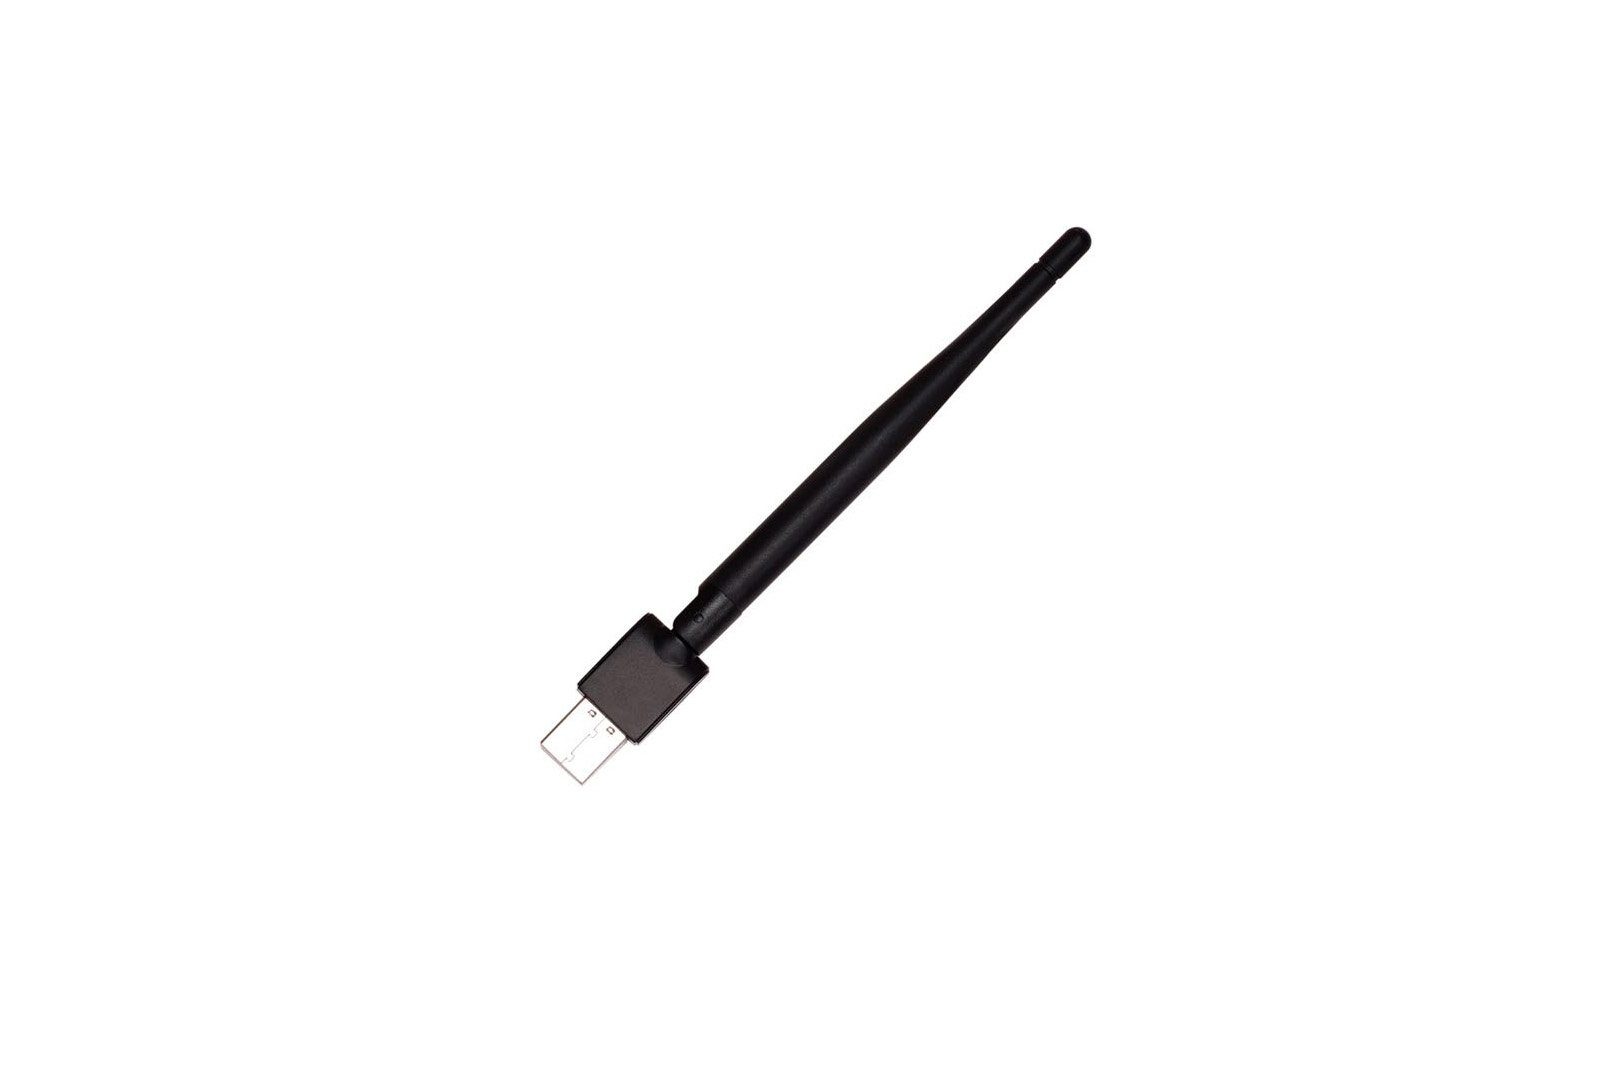 WLAN USB 150 OCTAGON Mbit/s WL048 SAT-Receiver Adapter 2.0